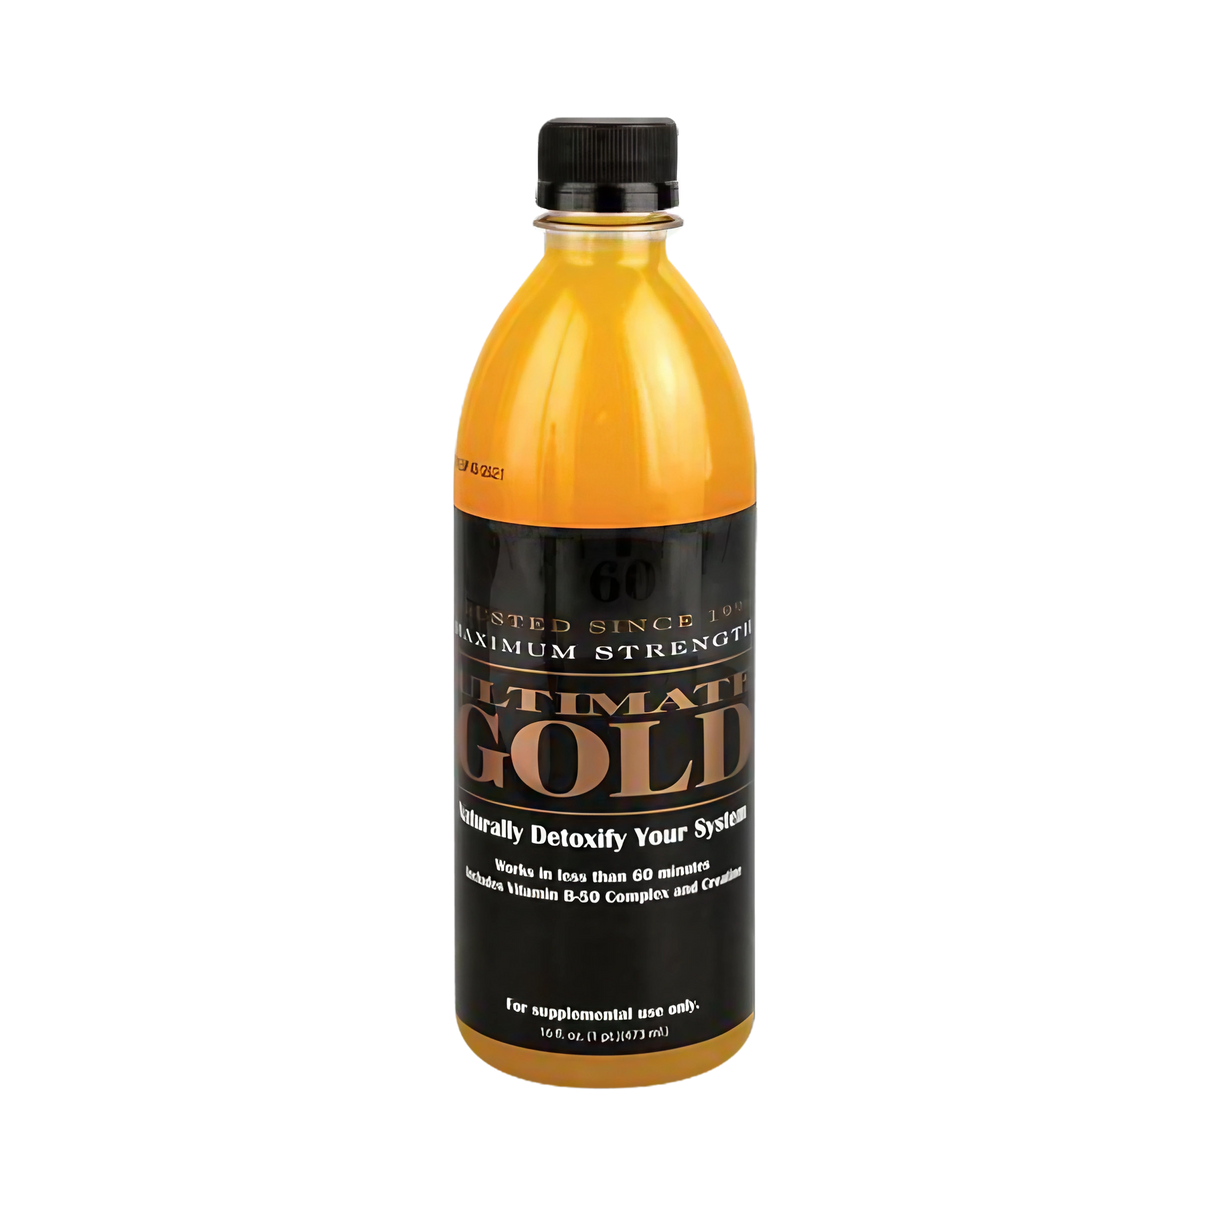 Ultimate Gold 16oz detox drink in orange bottle, front view, designed for system cleanse